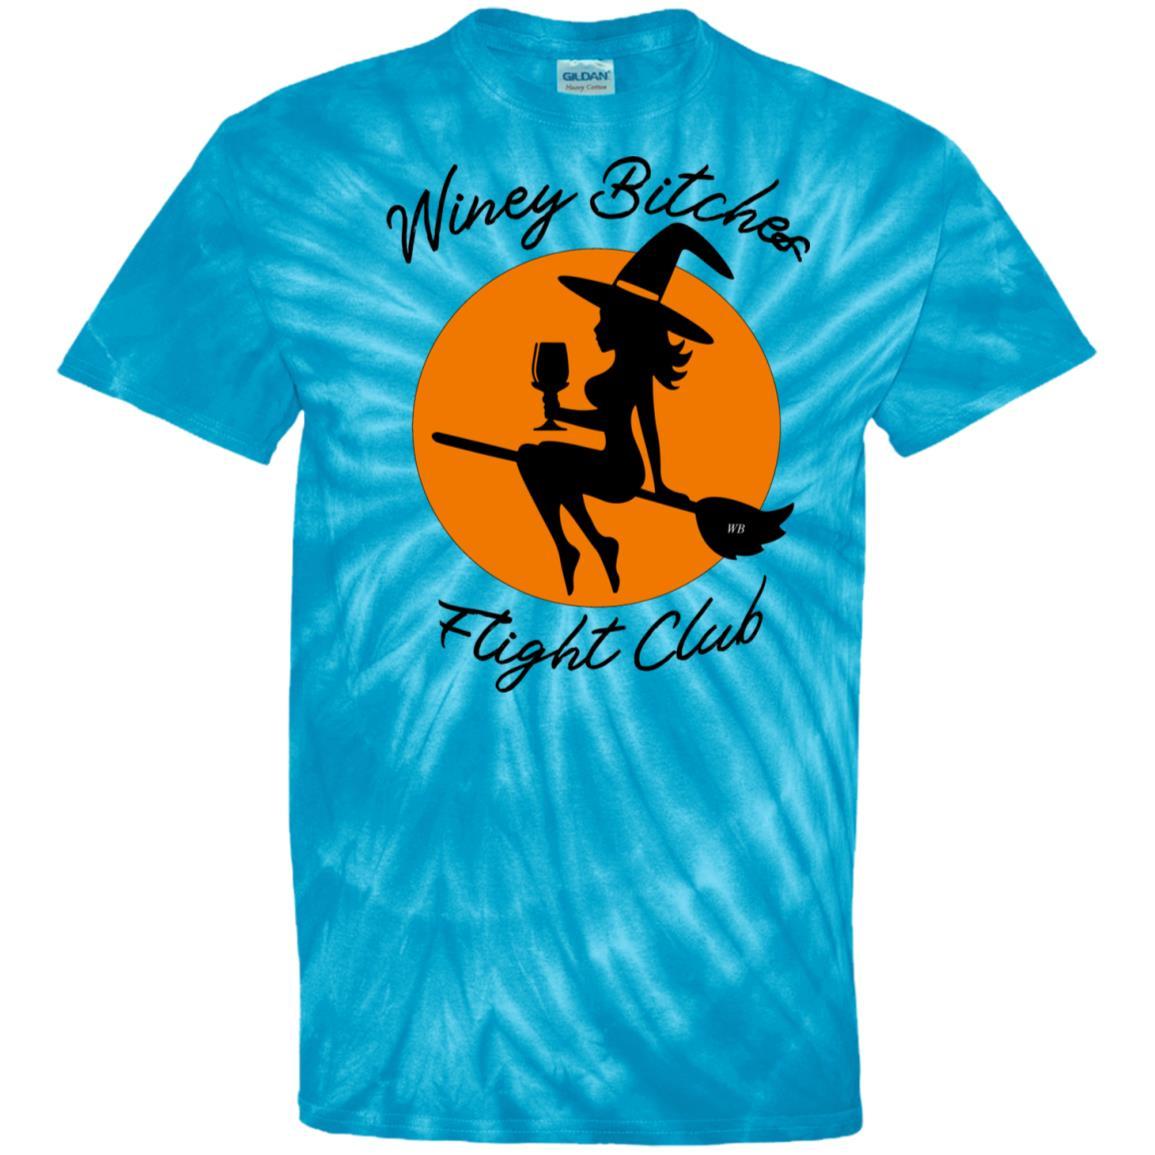 T-Shirts SpiderTurquoise / S WineyBitches.Co "Winey Bitches Flight Club" 100% Cotton Tie Dye T-Shirt WineyBitchesCo